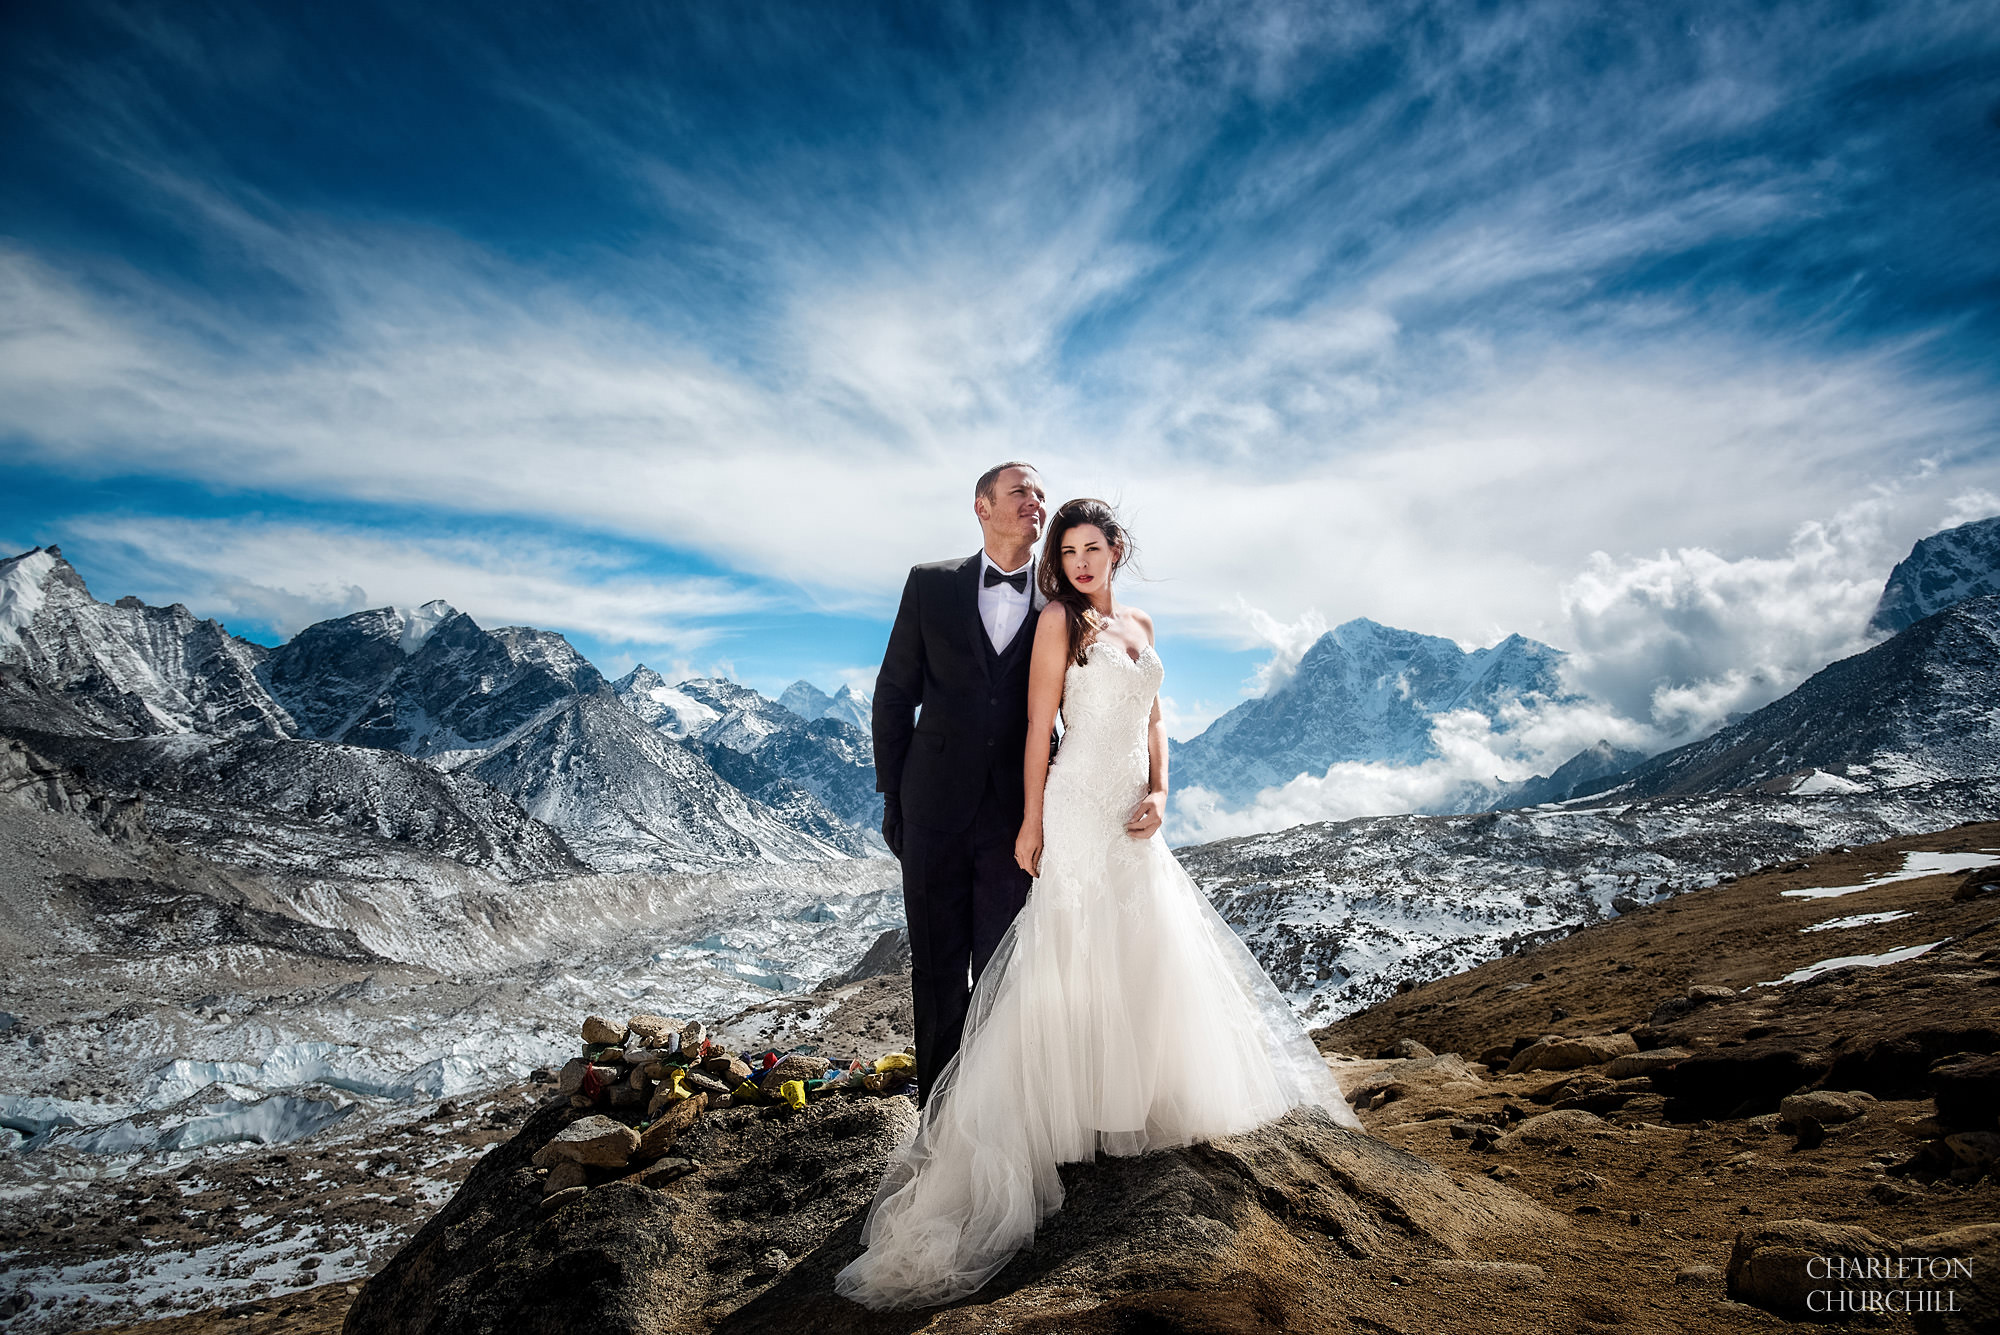 Mount Everest Base Camp Adventure Wedding Photography